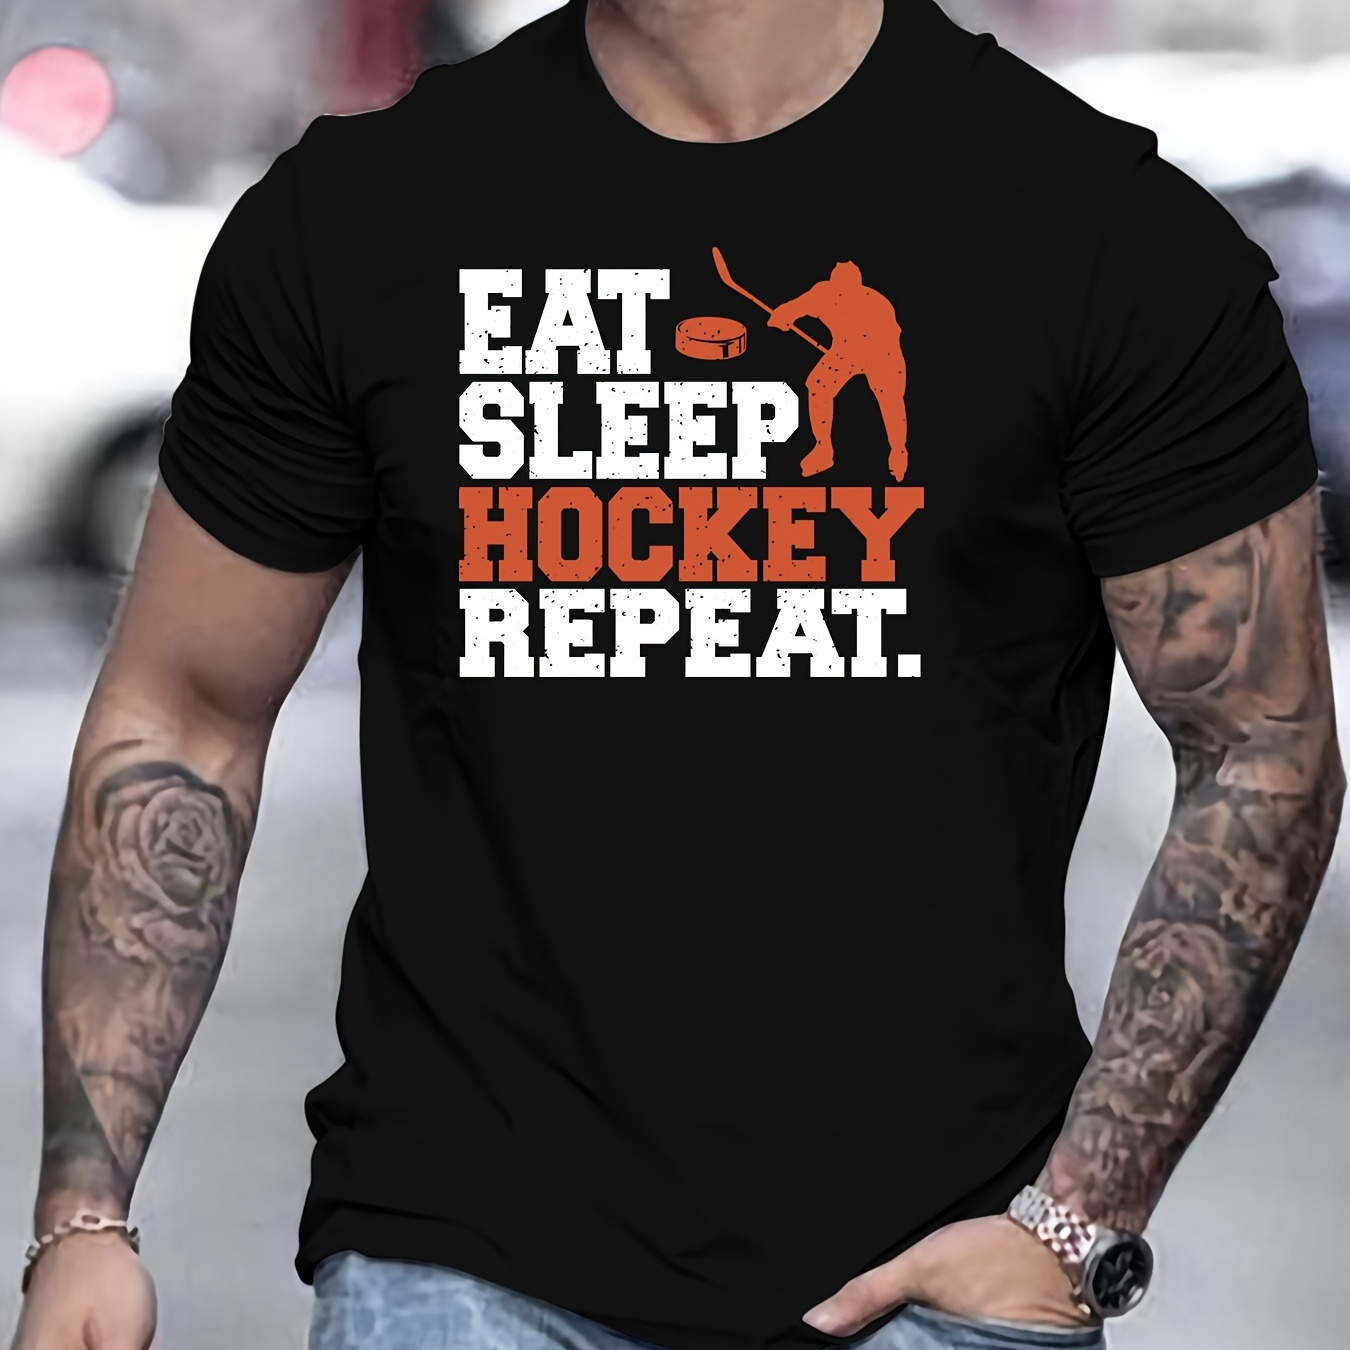 

Eat Sleep Hockey Repeat Print Crew Neck T-shirt For Men, Casual Short Sleeve Top, Men's Clothing